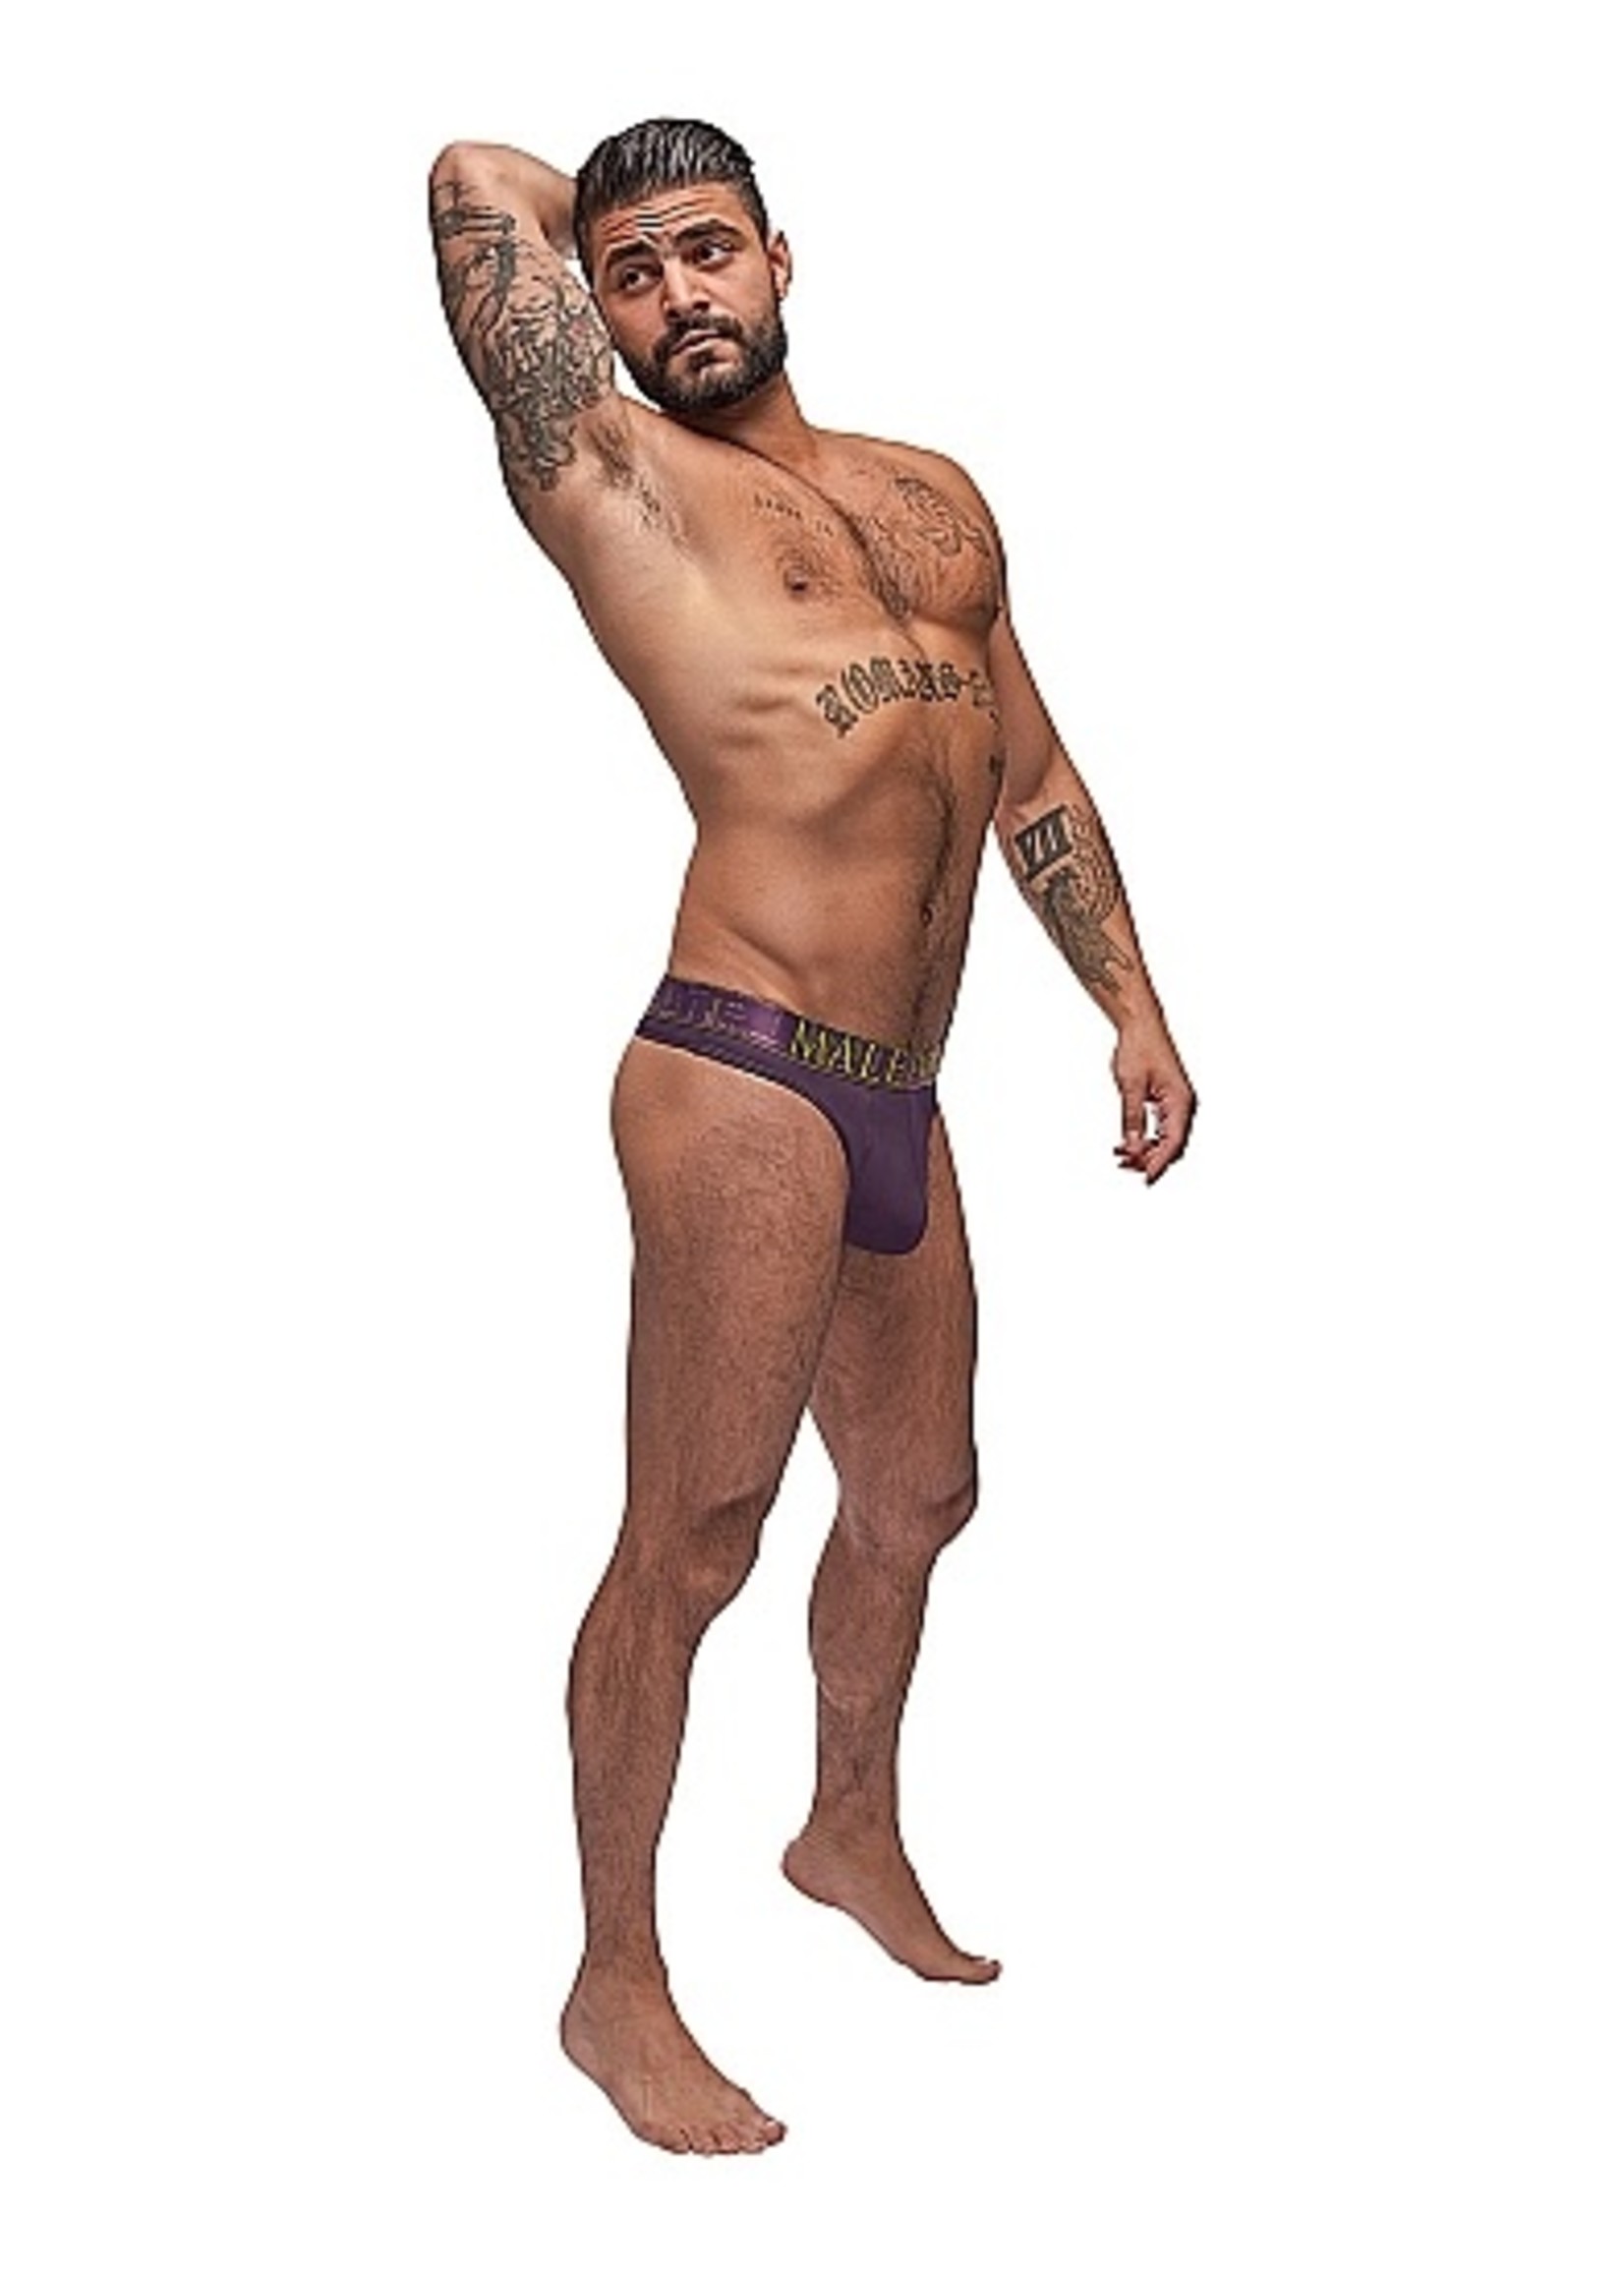 Male power Avant-garde enhancer thong - dark purple